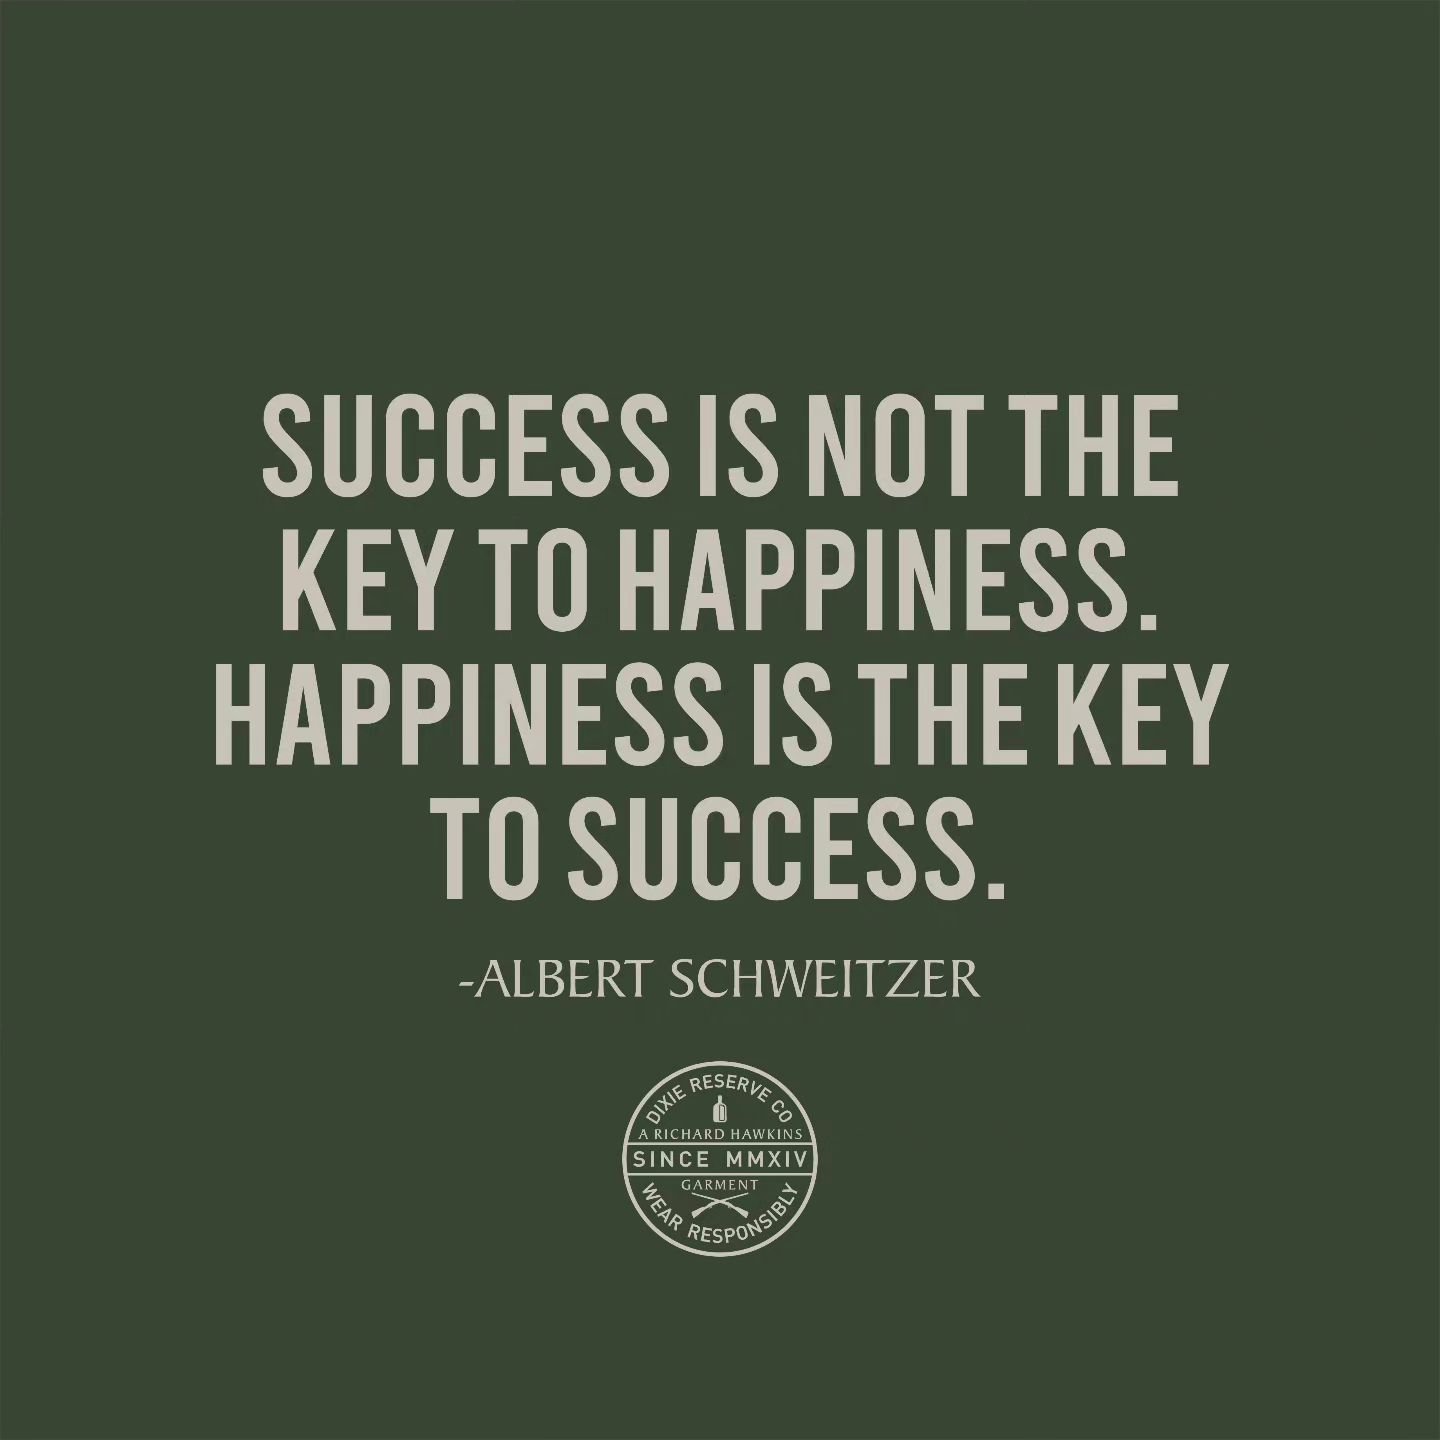 Wisdom.
.
.
.
.
#albertschweitzer #happiness #success #quotestoliveby #qotd #quotes #quote #quoteme #wordsofwisdom #wednesdaywisdom #quoteoftheday #happinessovereverything